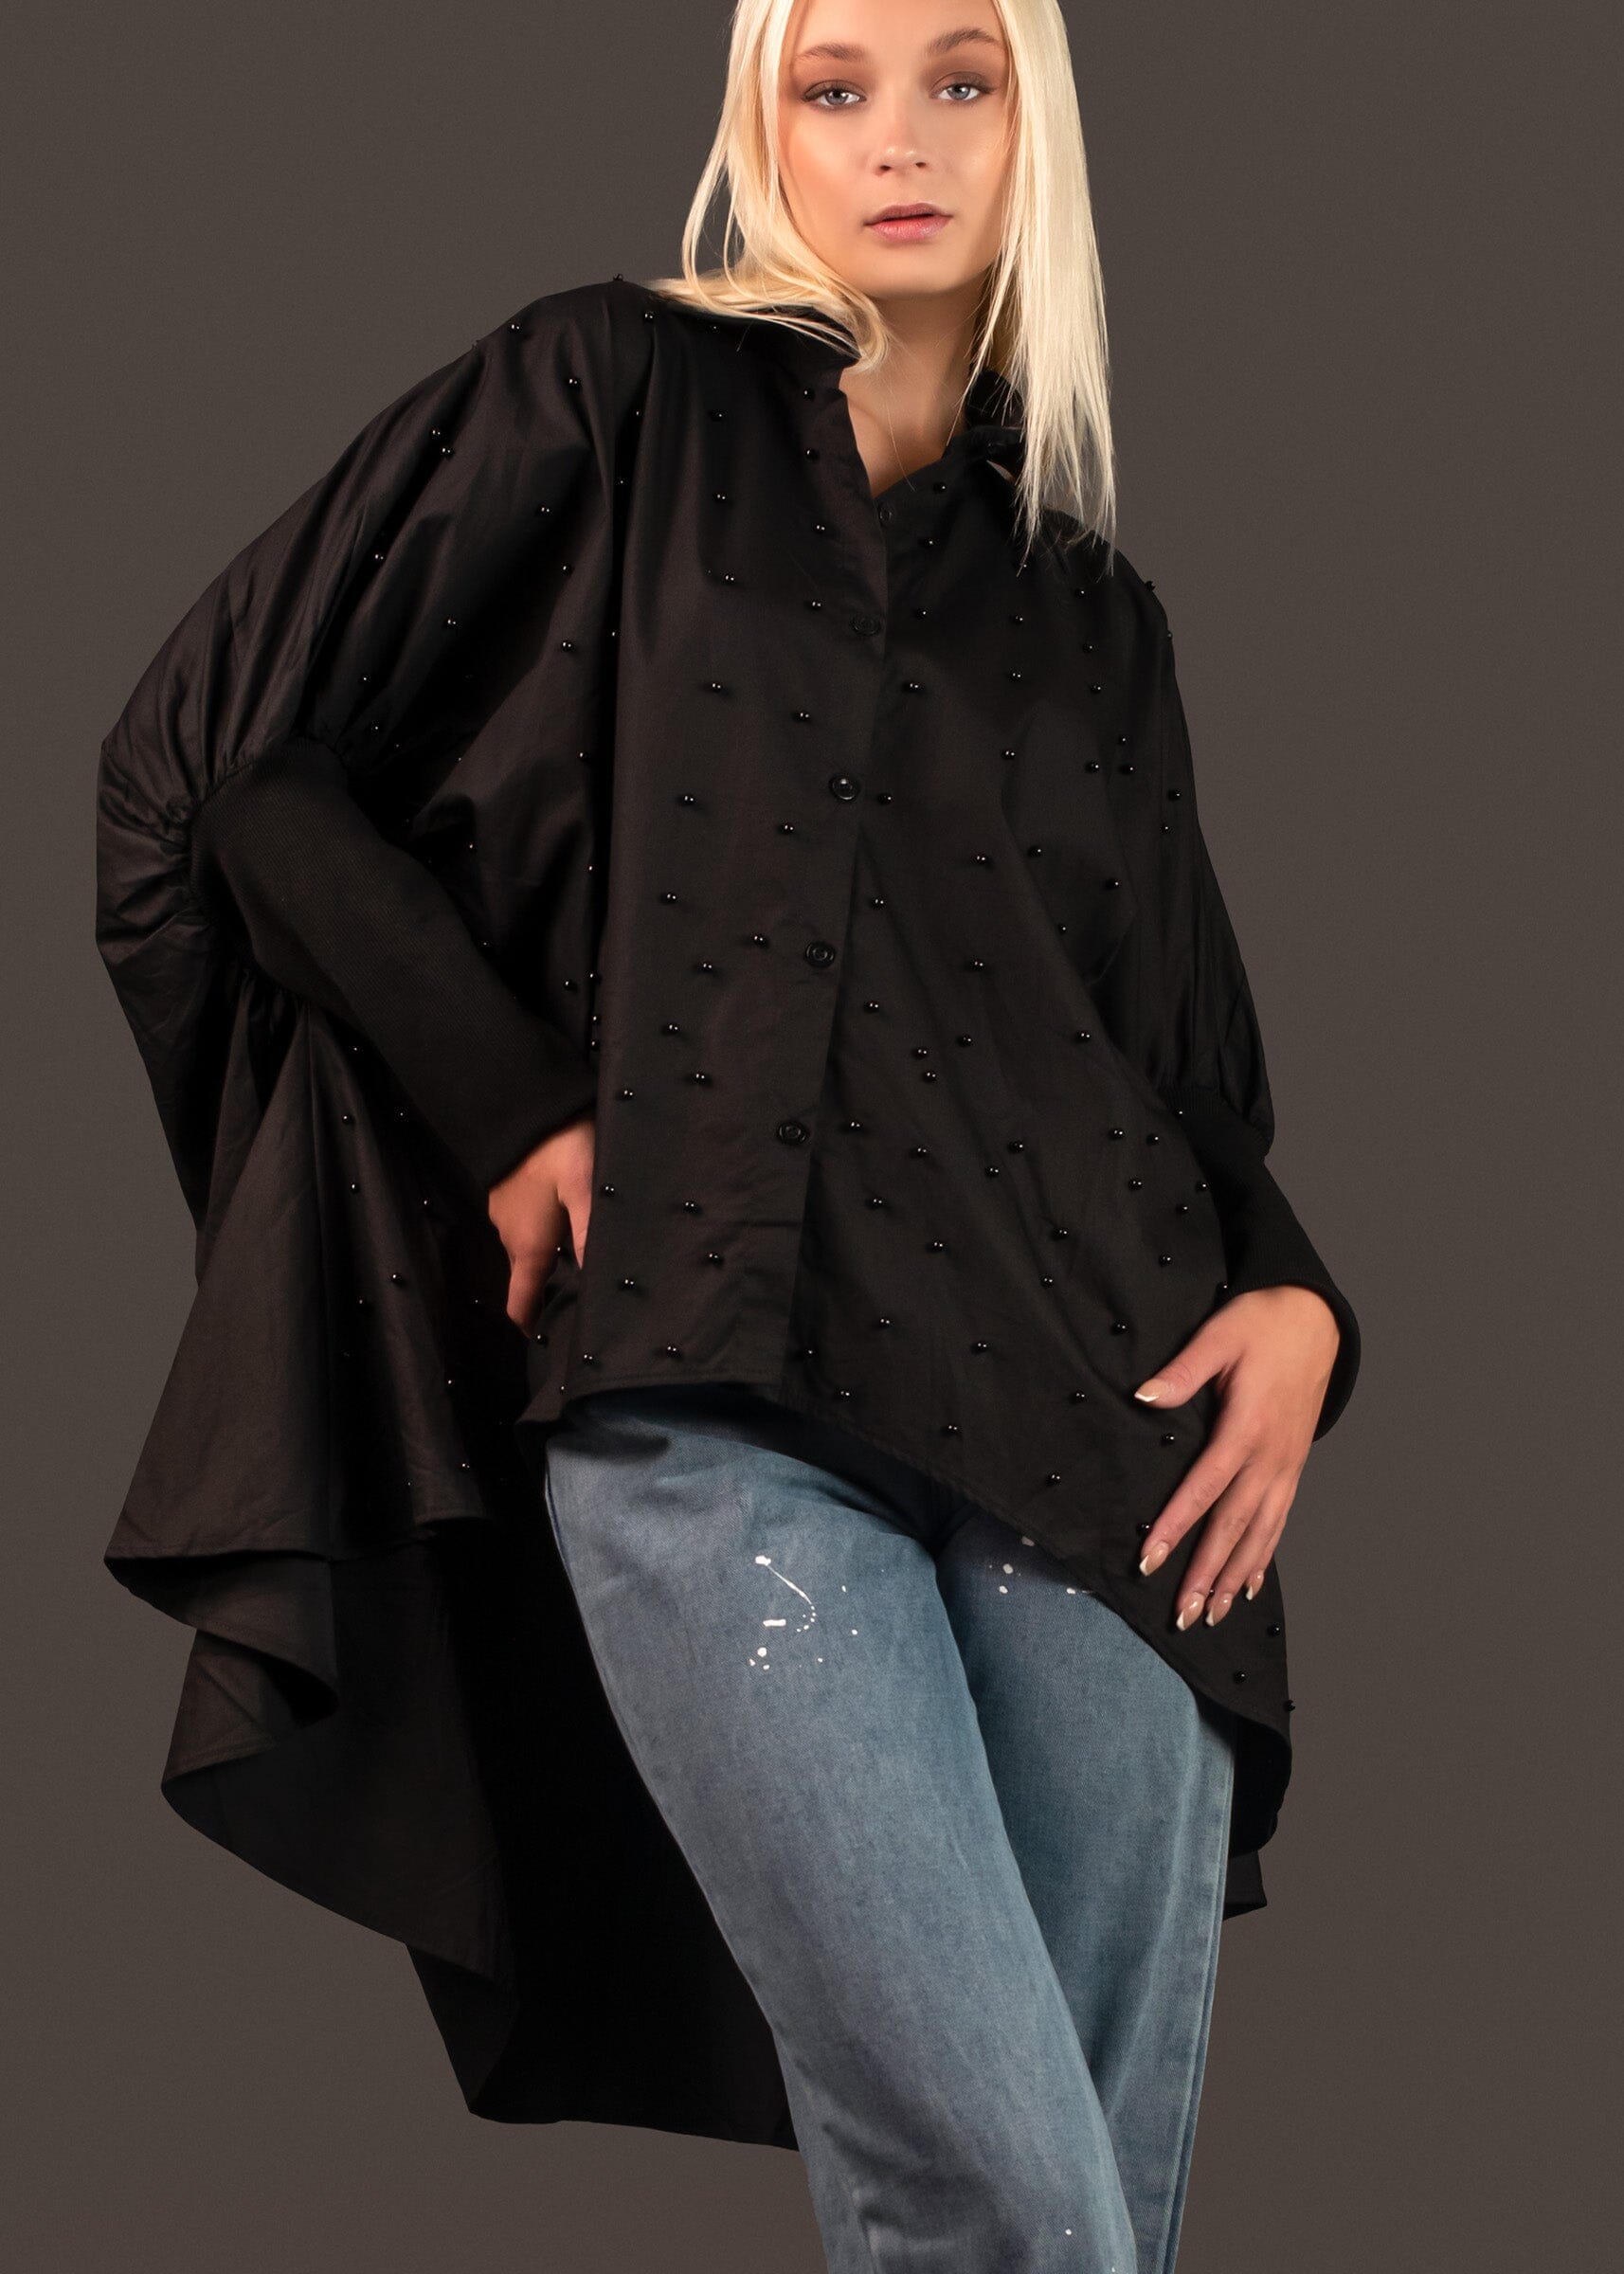 High Low Embellished Dress Shirt Blouses Kate Hewko Black One Size 